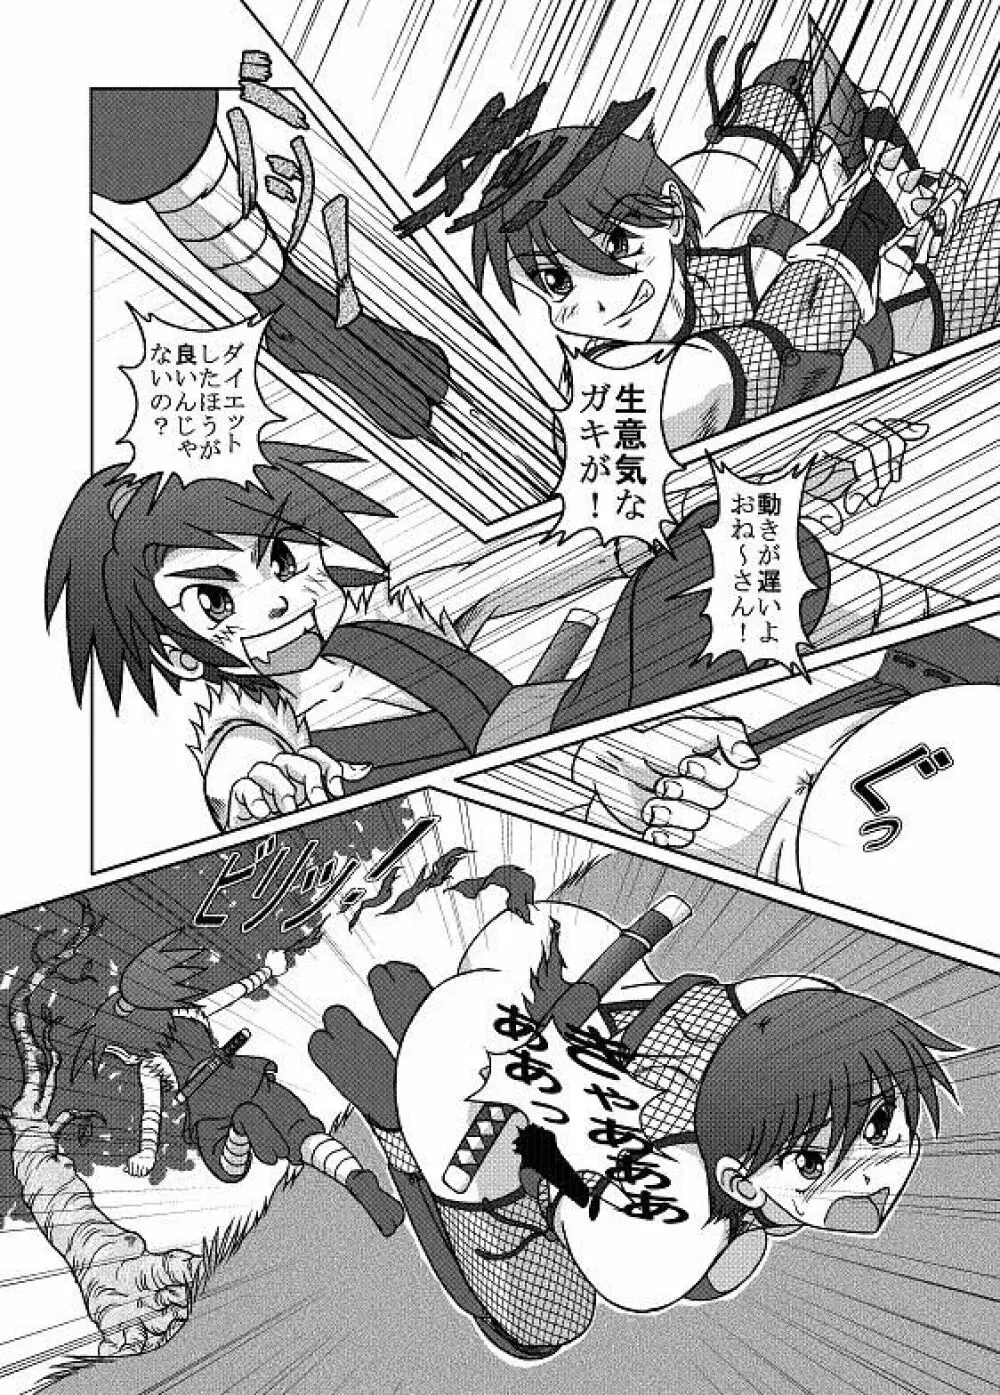 Same-themed manga about kid fighting female ninjas from japanese imageboard. 36ページ